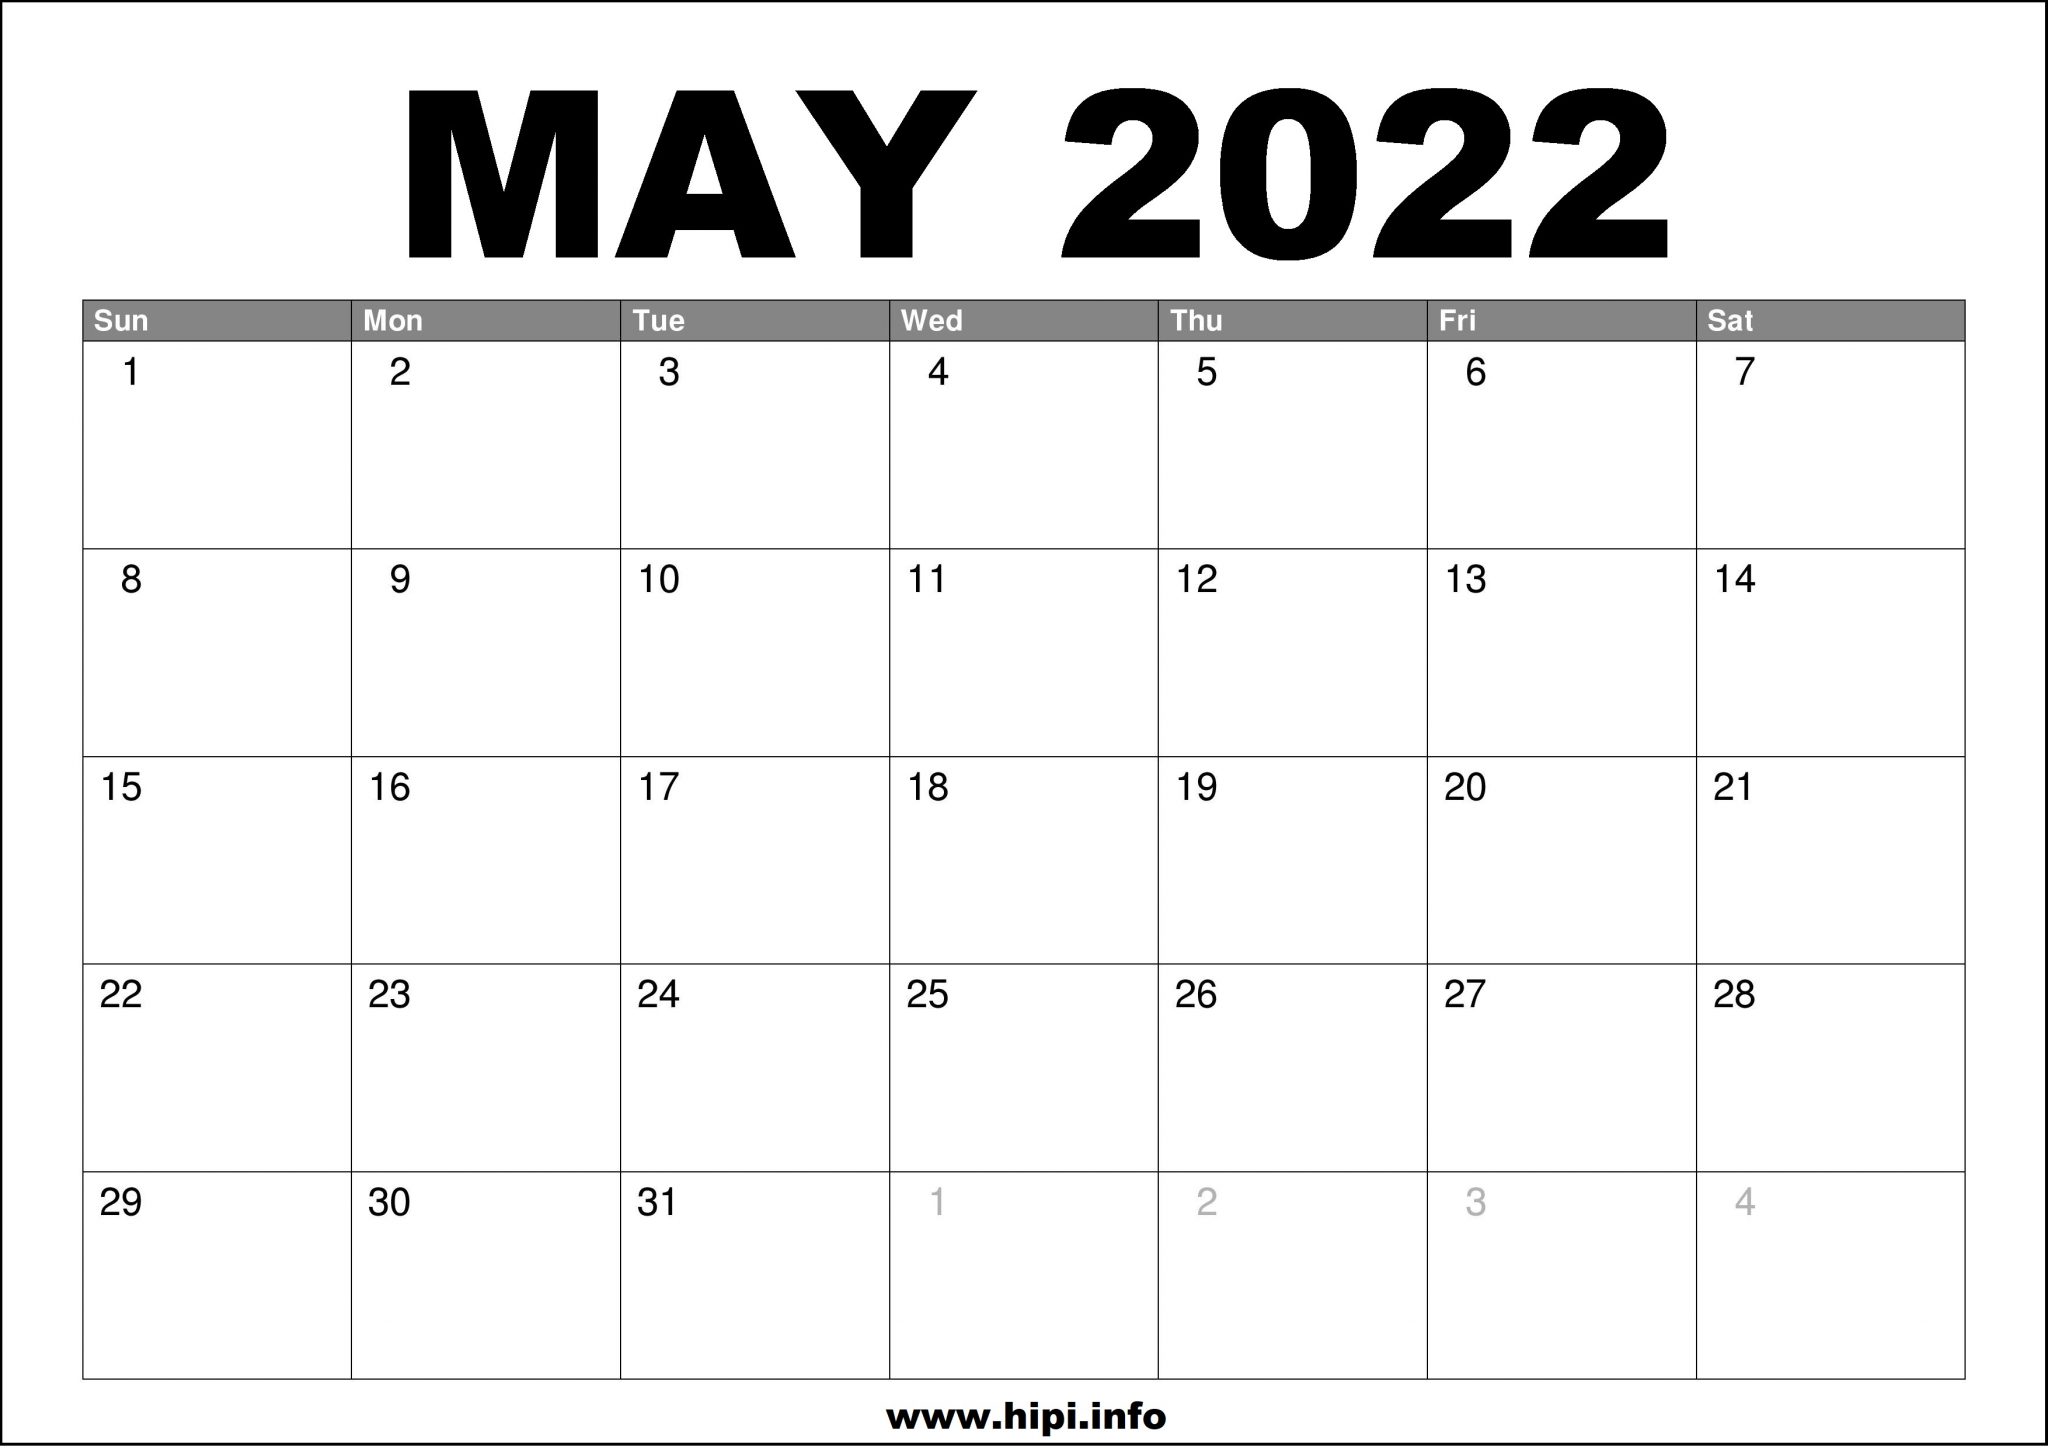 may 2022 calendar printable free hipiinfo calendars